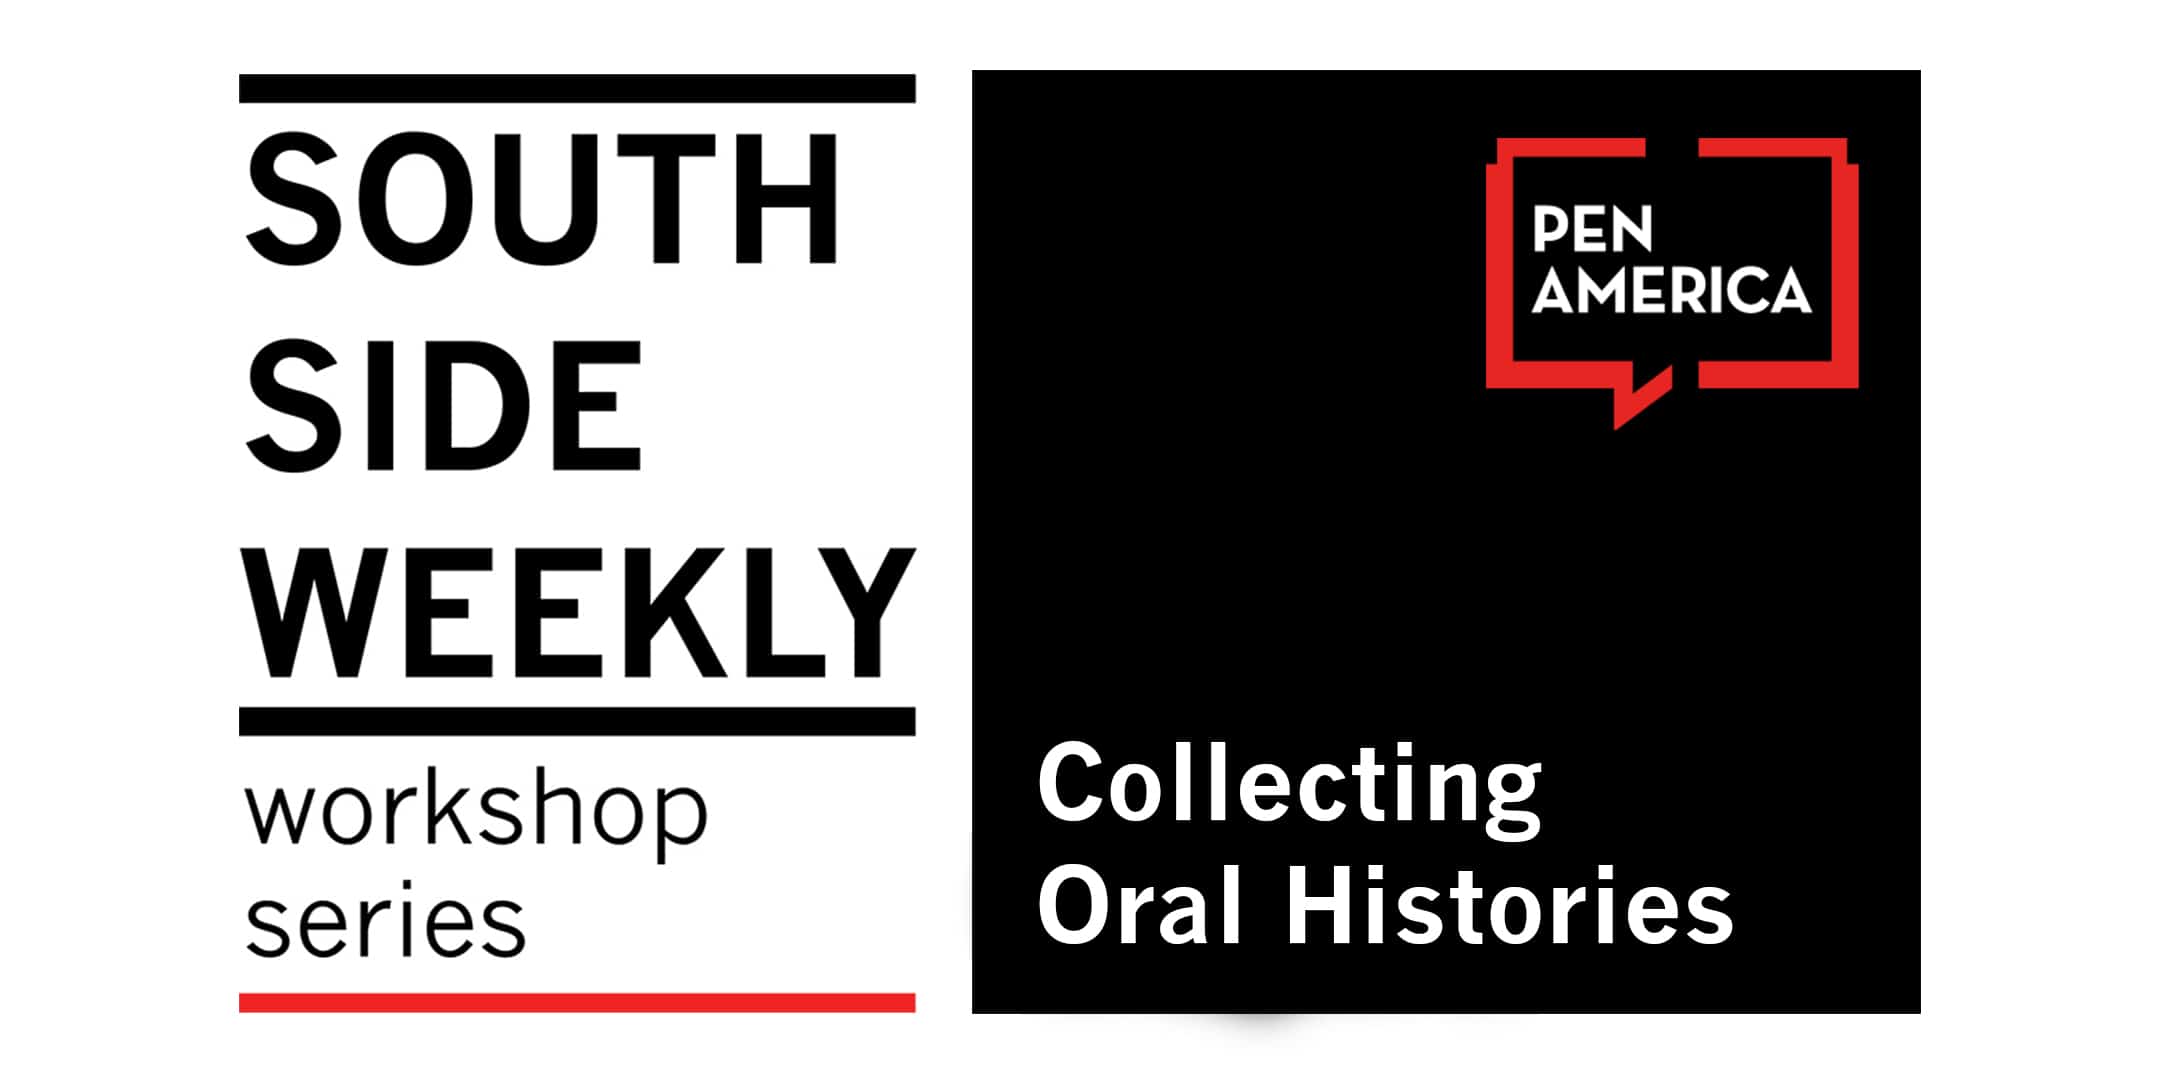 South Side Weekly Workshop Series: Collecting Oral Histories